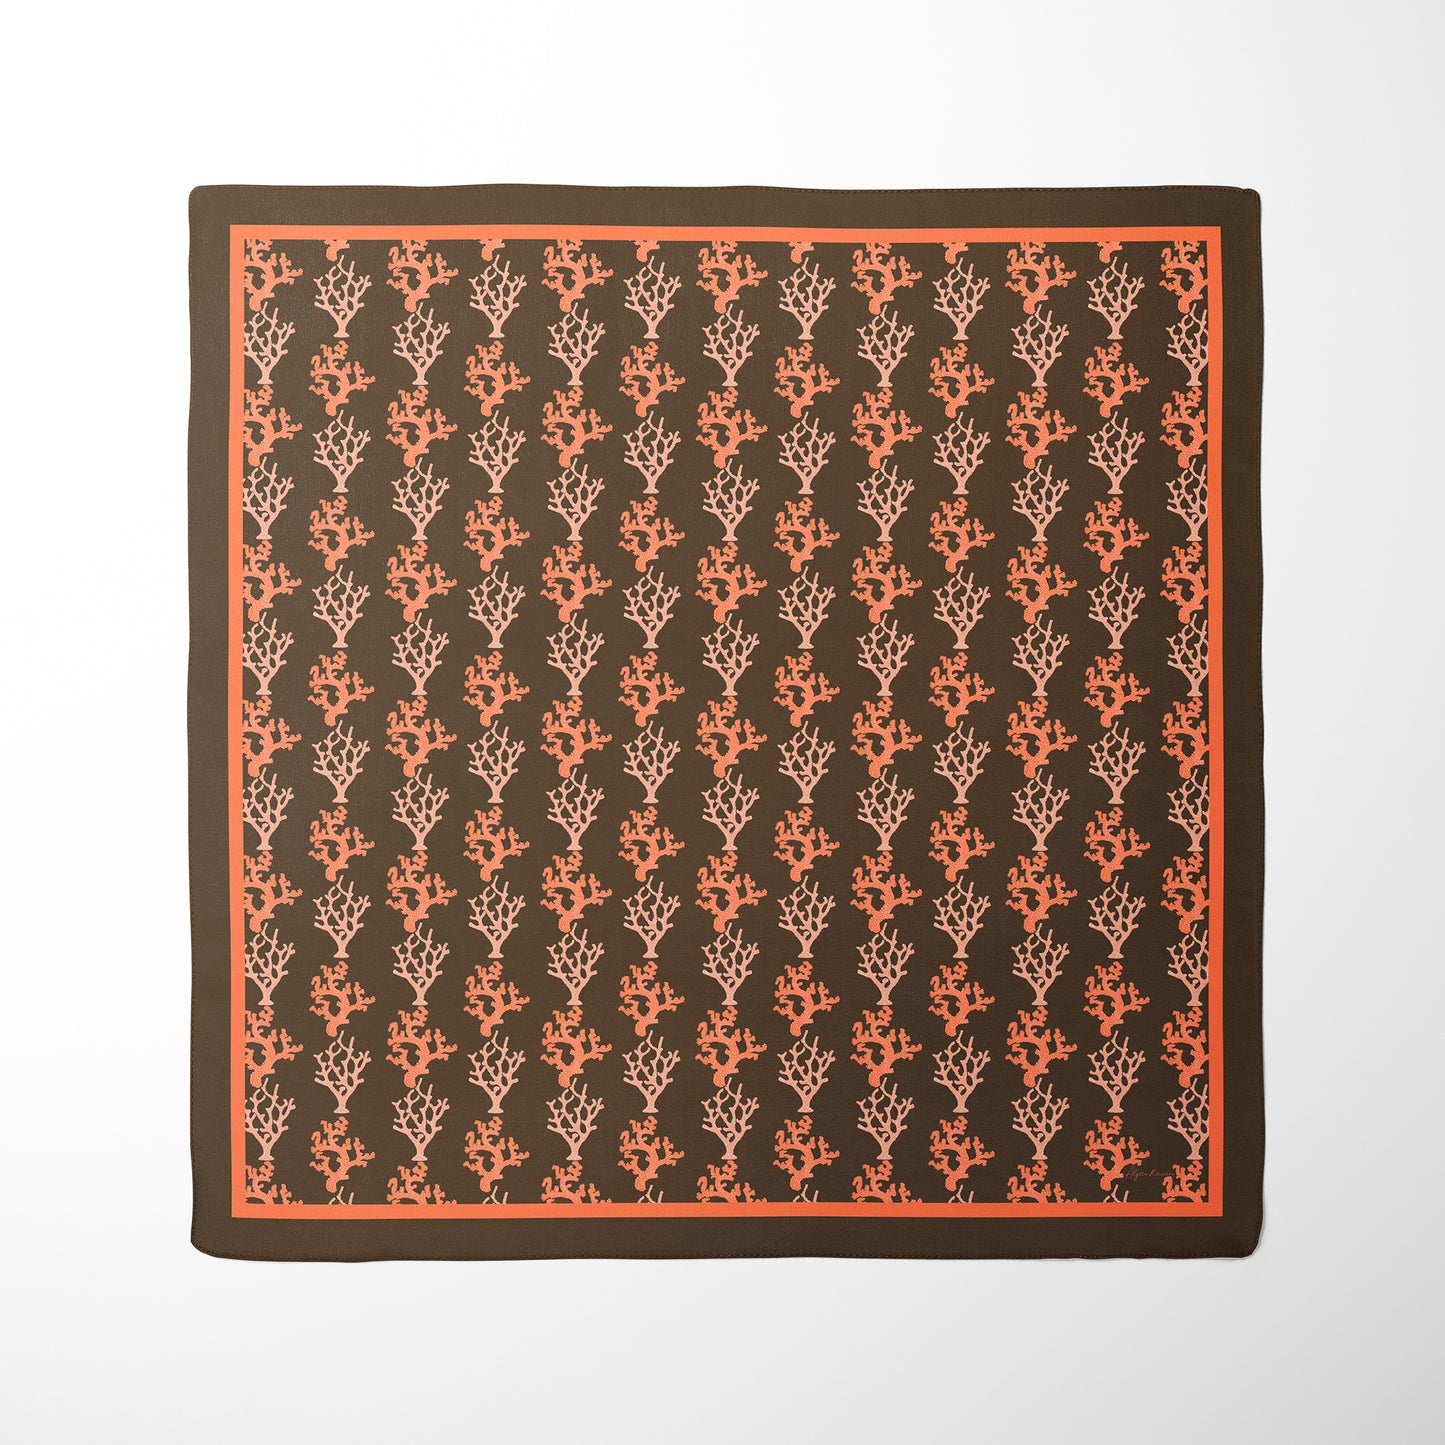 Sea Coral Print Satin Square Scarf, Brown & Orange, Two Sizes